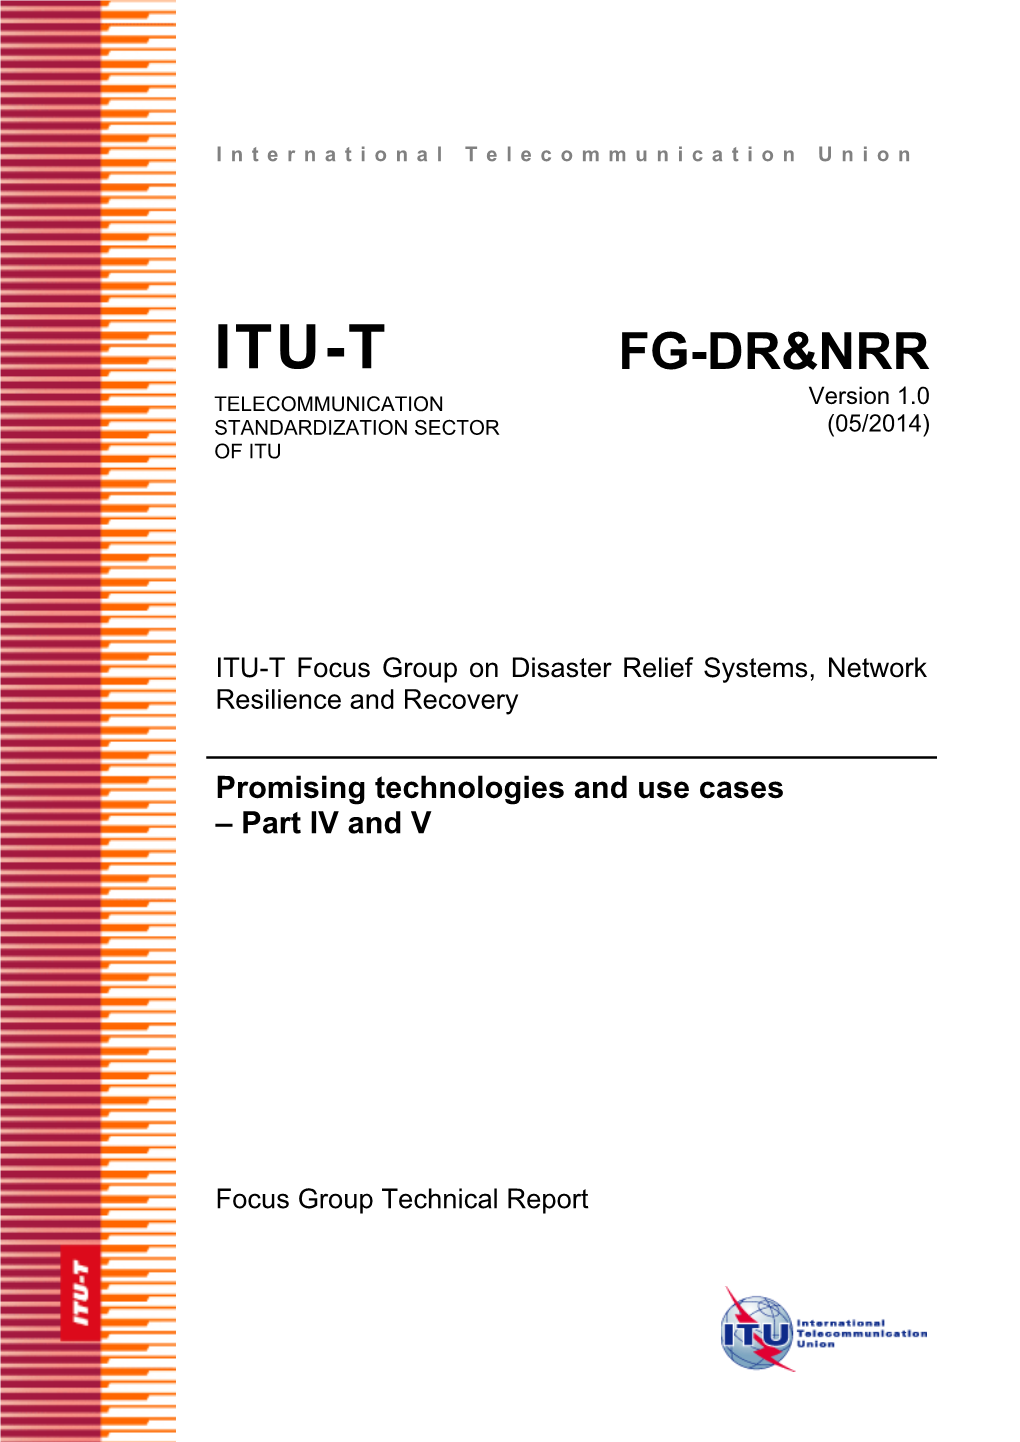 ITU-T FG-DR&NRR Deliverable